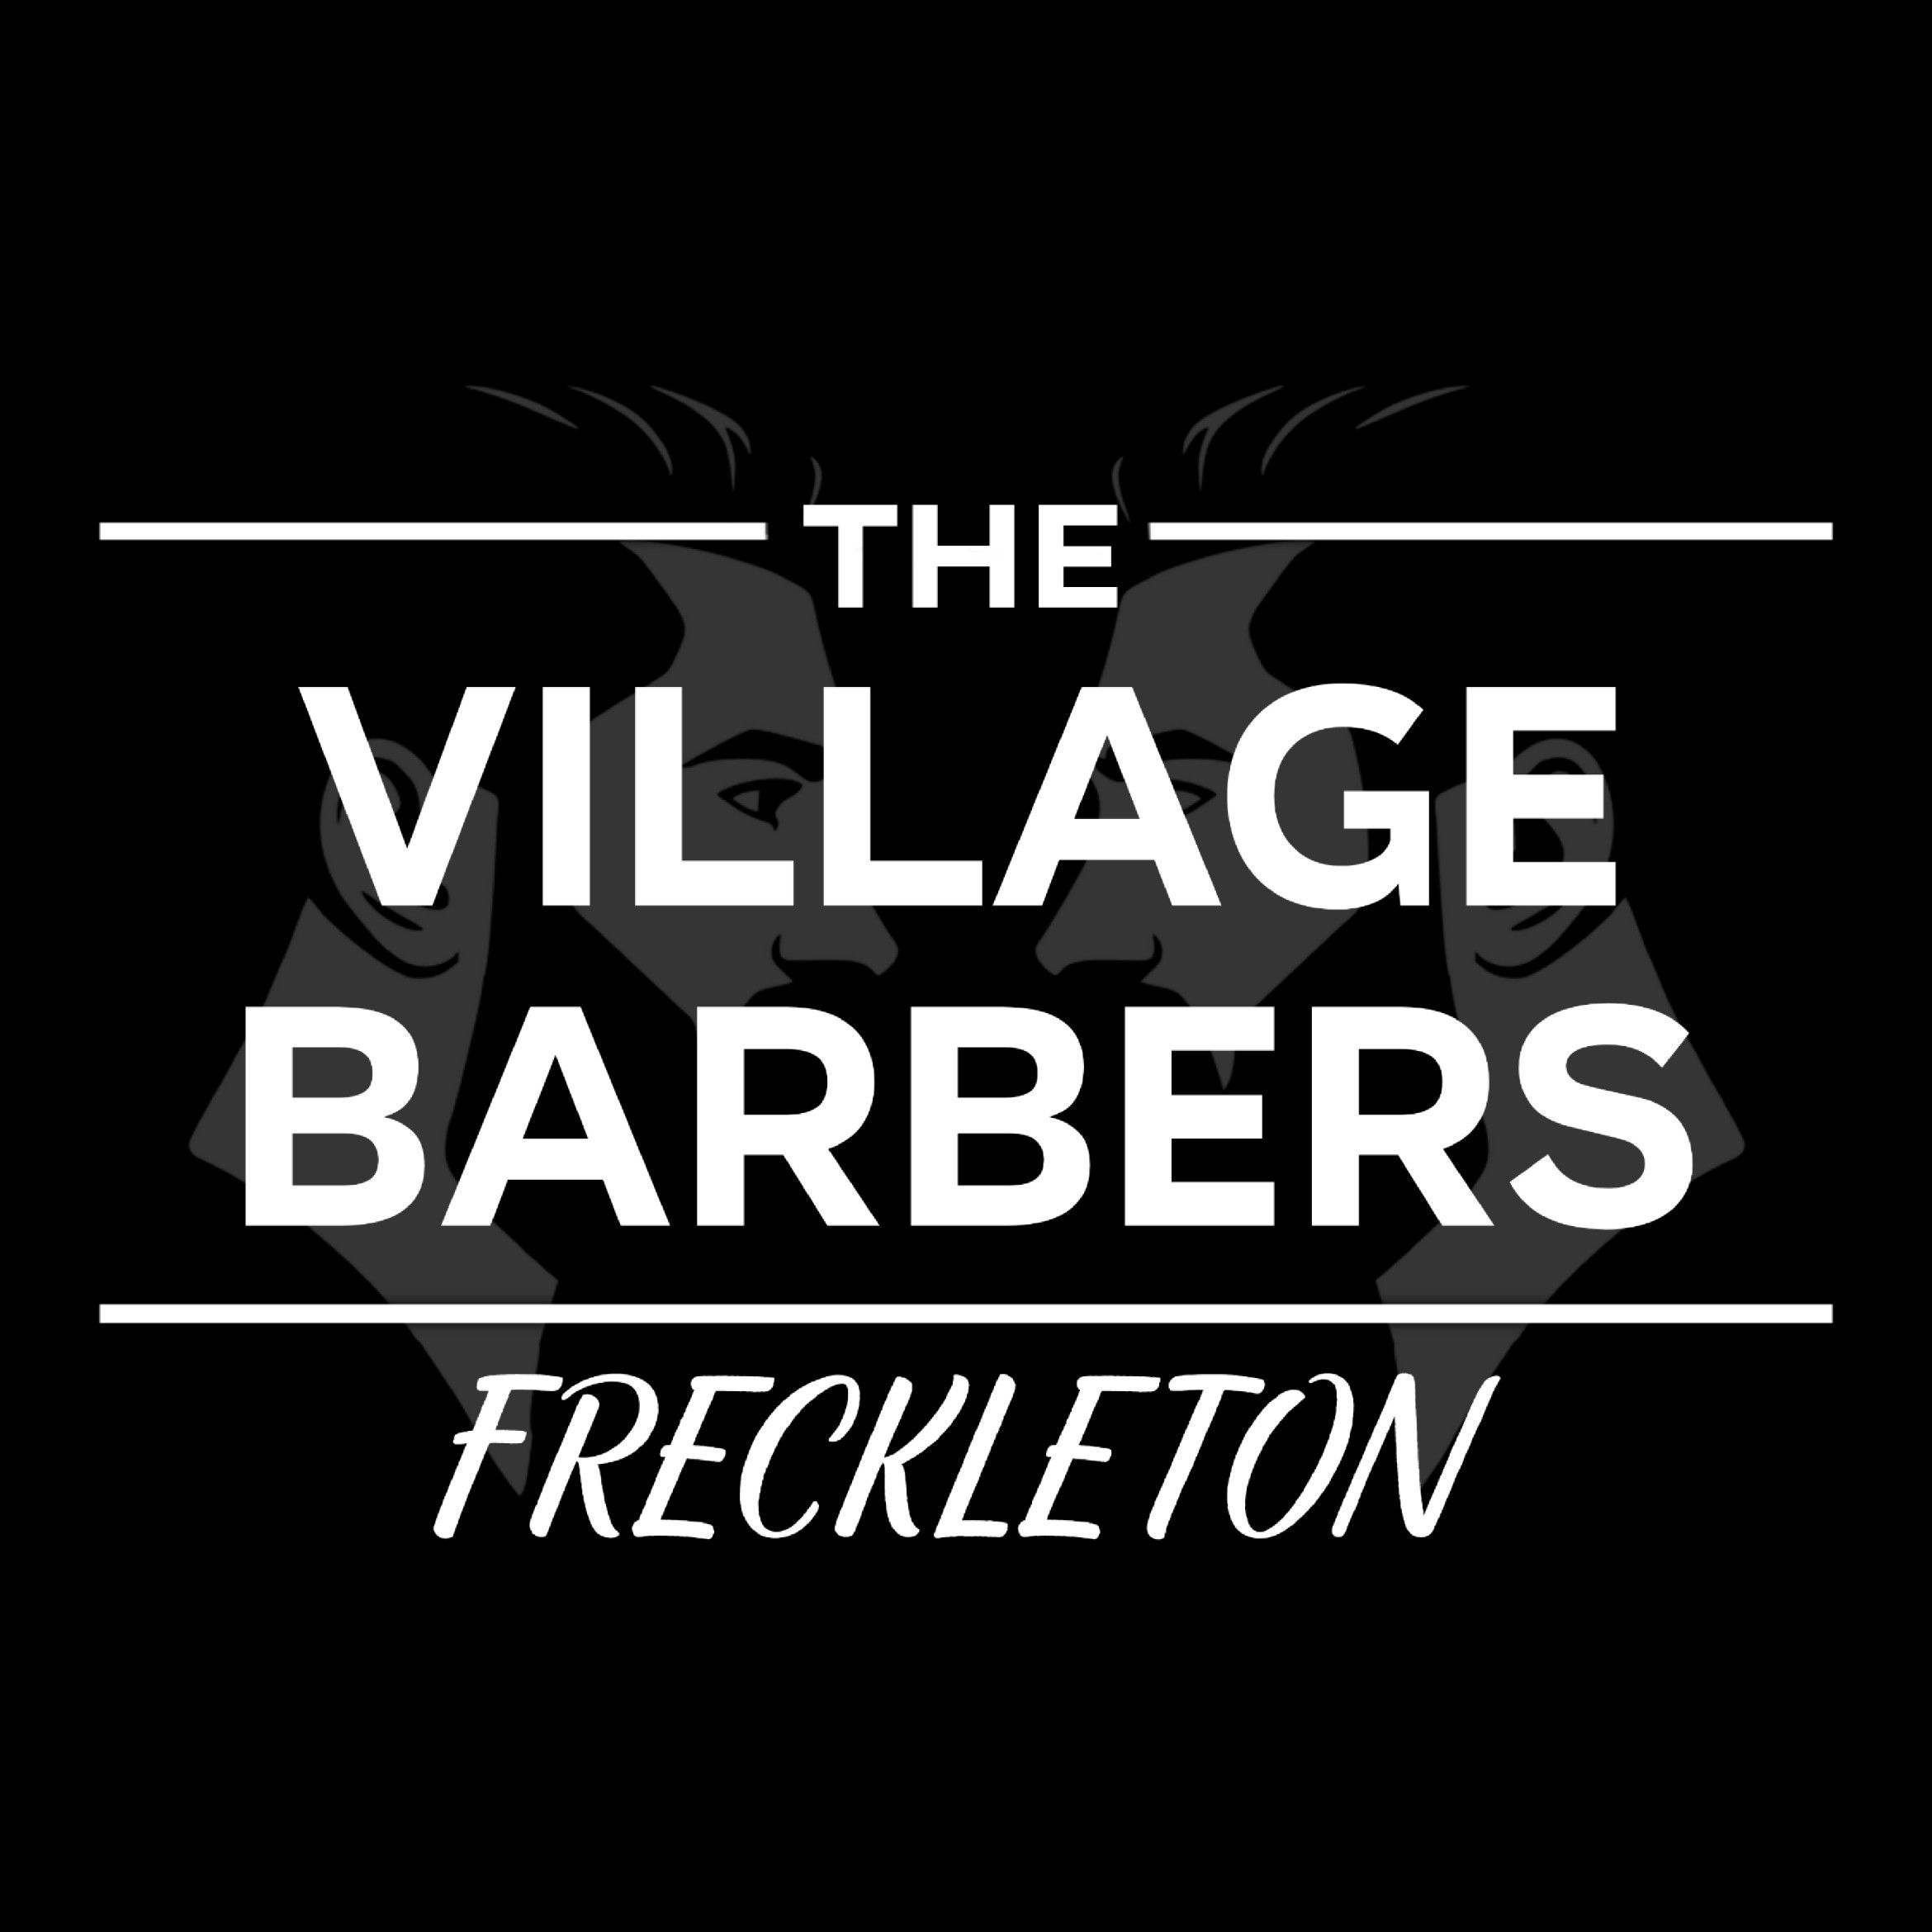 The Village Barbers - Freckleton, Preston Old Road, Freckleton, 22b, PR4 1PD, Preston